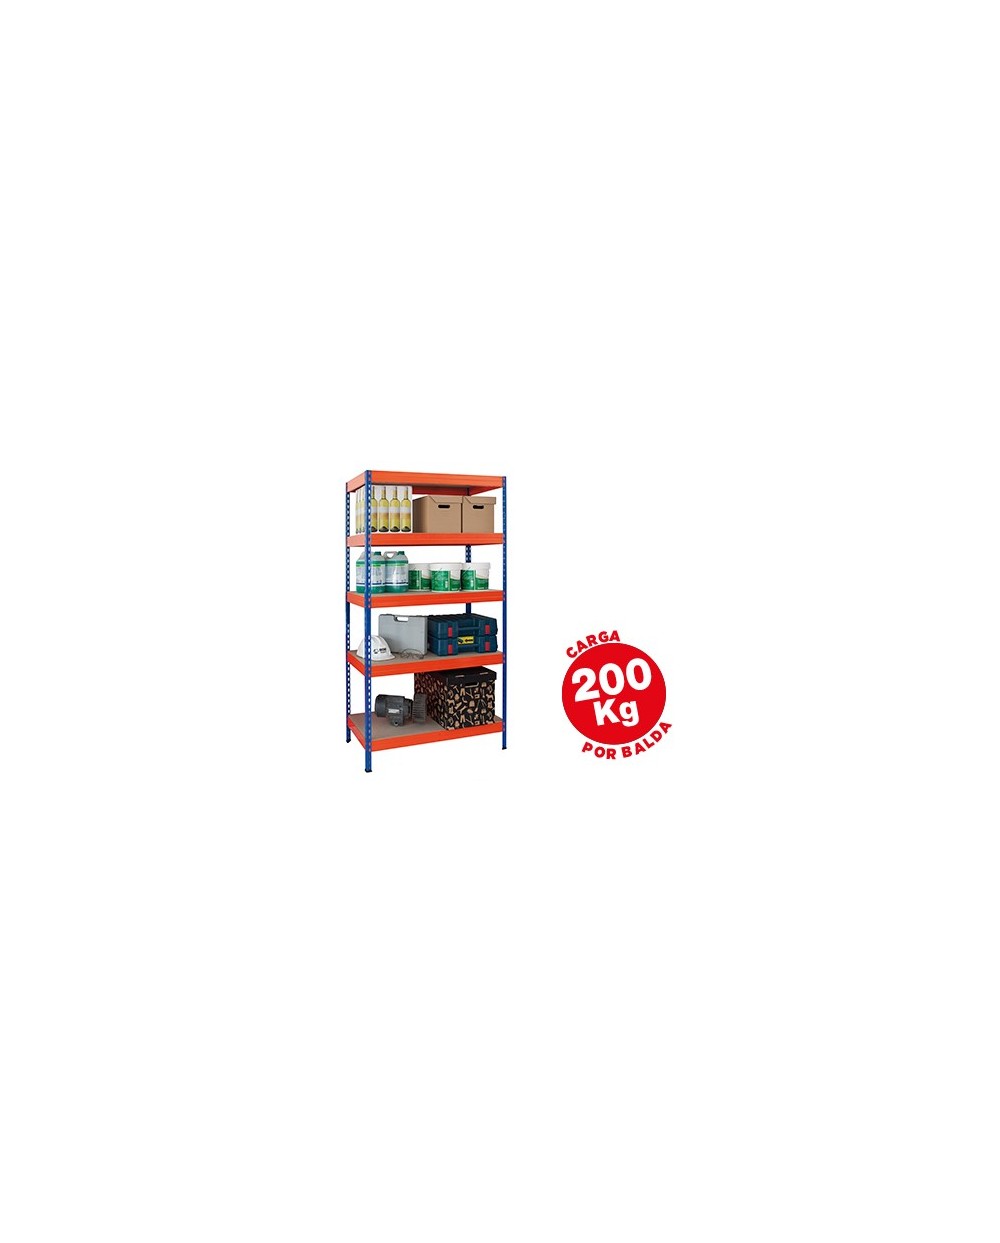 Estanteria metalica ar storage 180x90x45 cm 5 estantes 200kg por estante bandejas de maderasin tornillos azul naranja